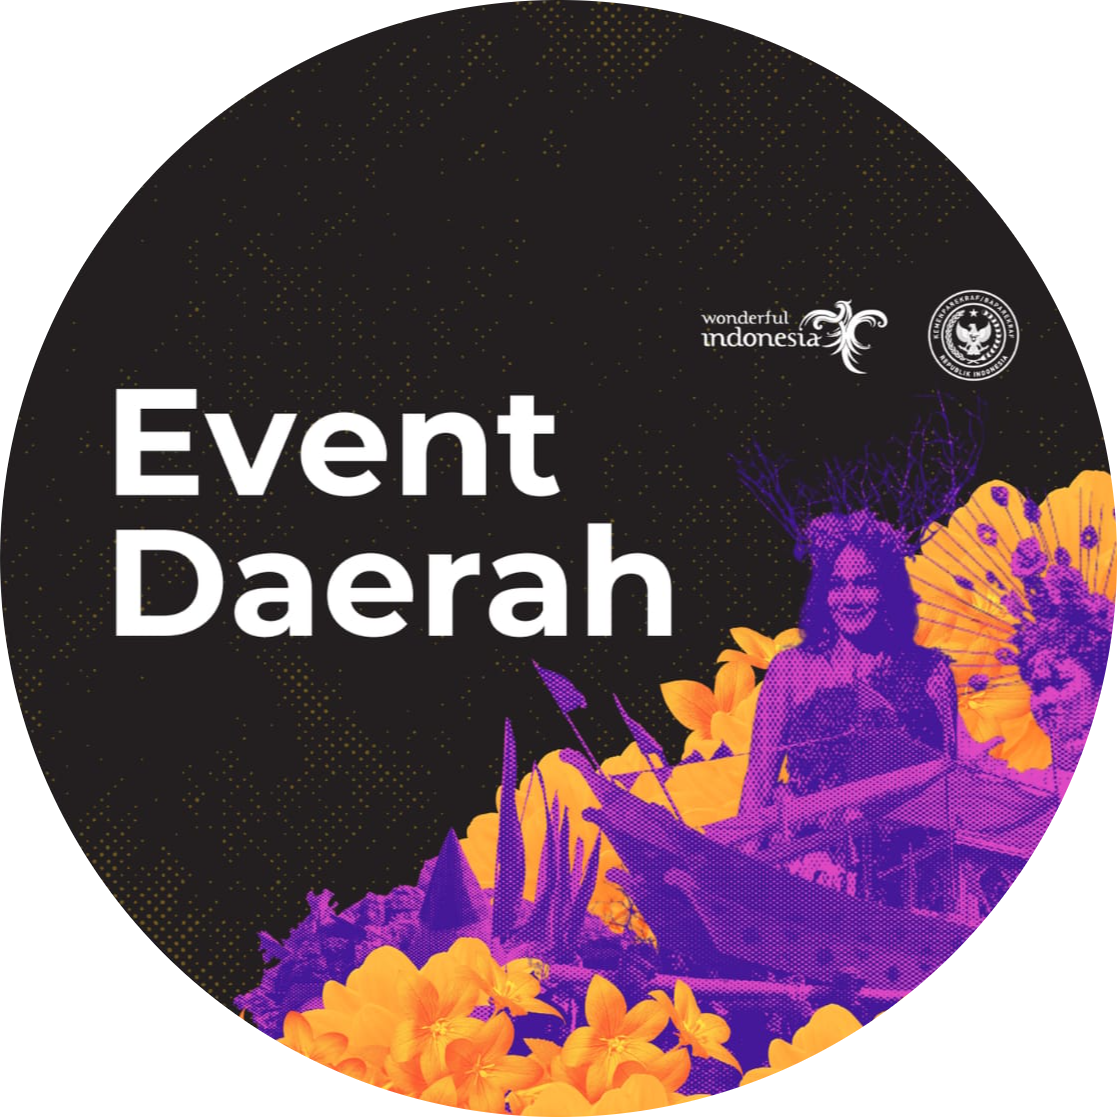 EVENT DAERAH